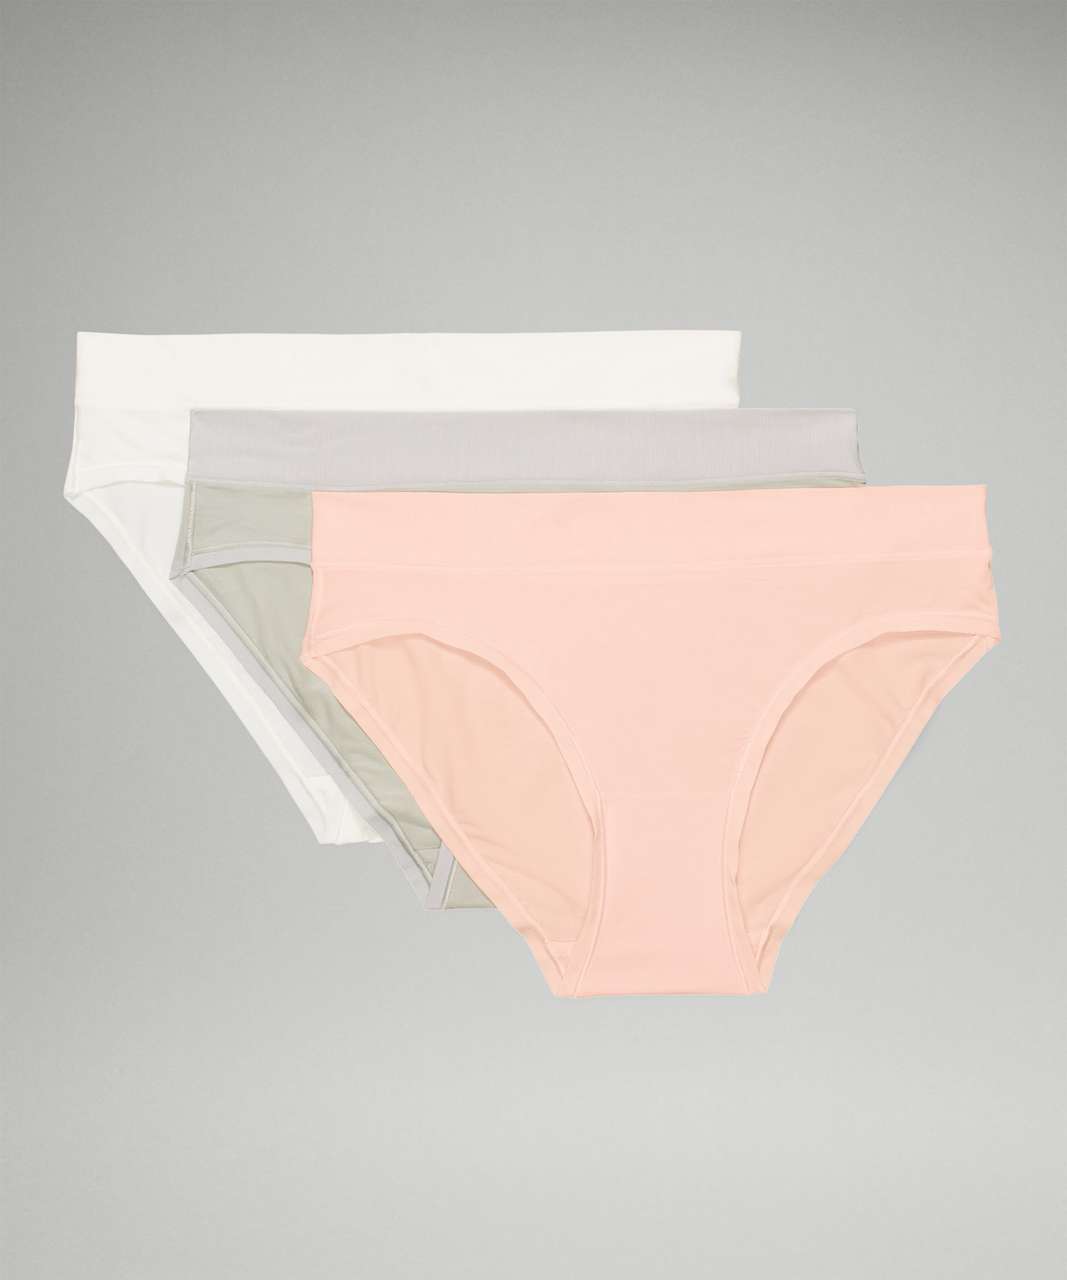 Lululemon UnderEase Mid-Rise Bikini Underwear 3 Pack - Lemon Sorbet / Green Fern / Seal Grey / Malibu Peach